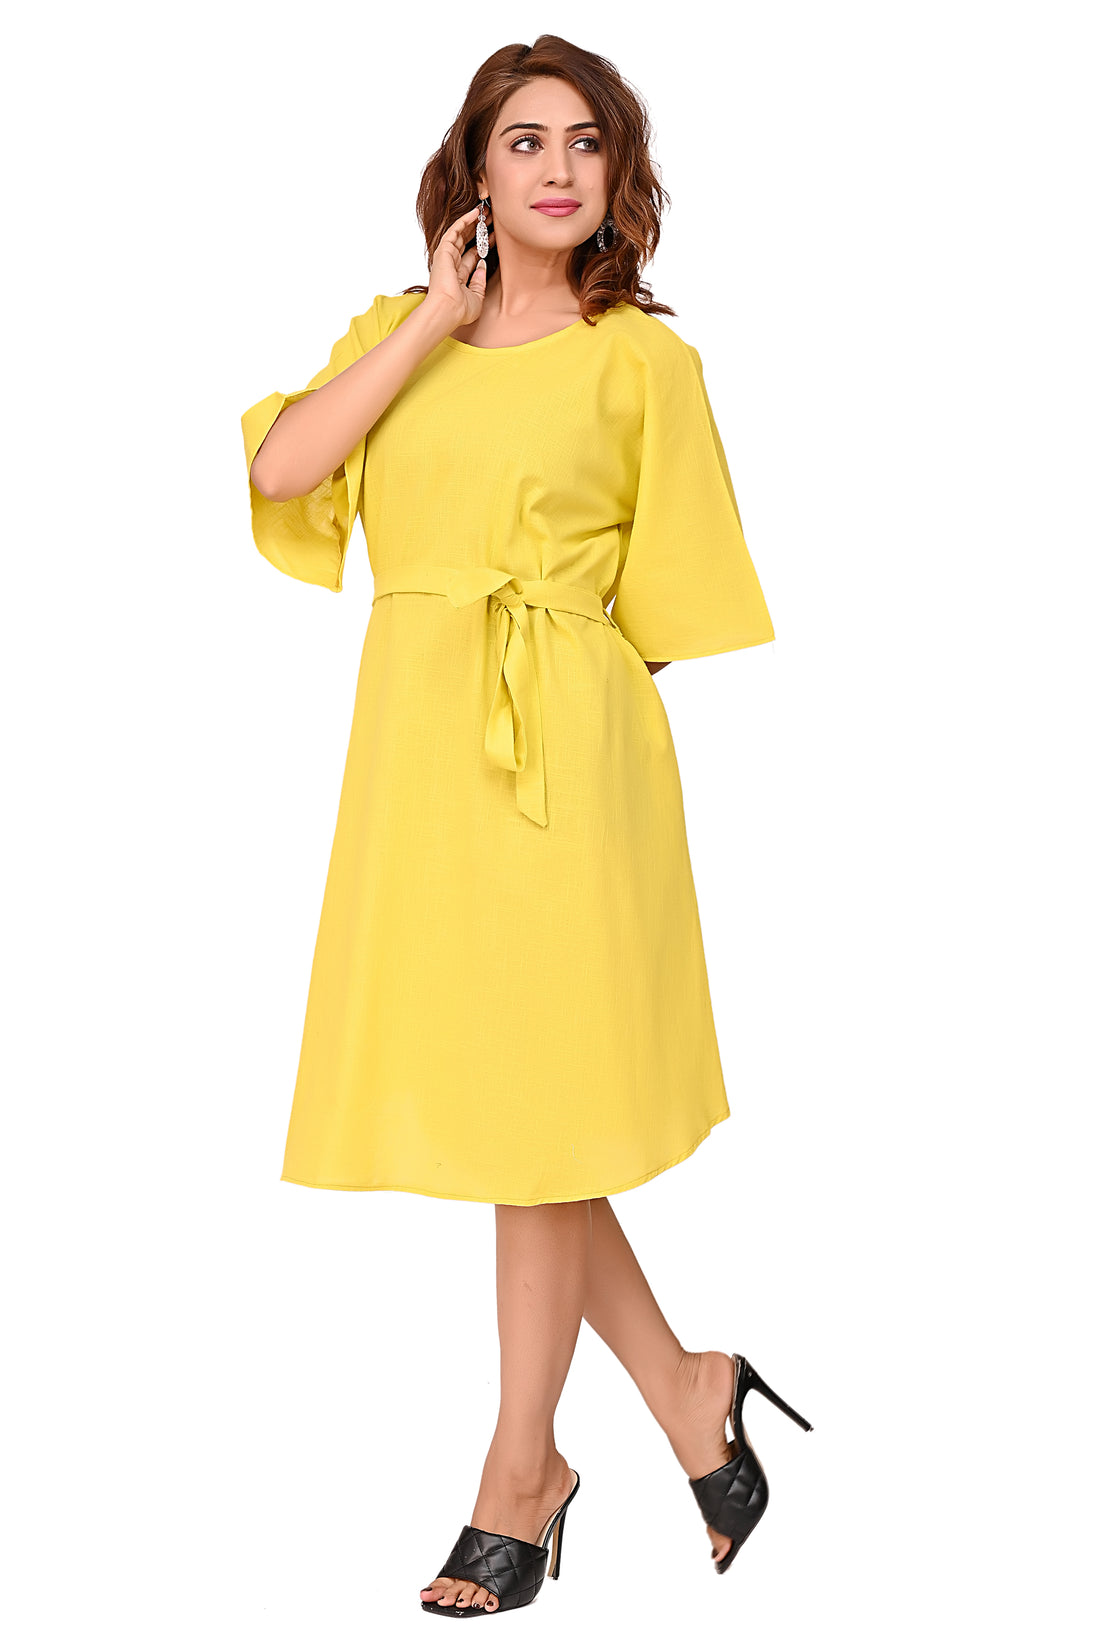 Nirmal online Premium Quality Cotton Slub Tunic Dress for Women in Yellow Colour